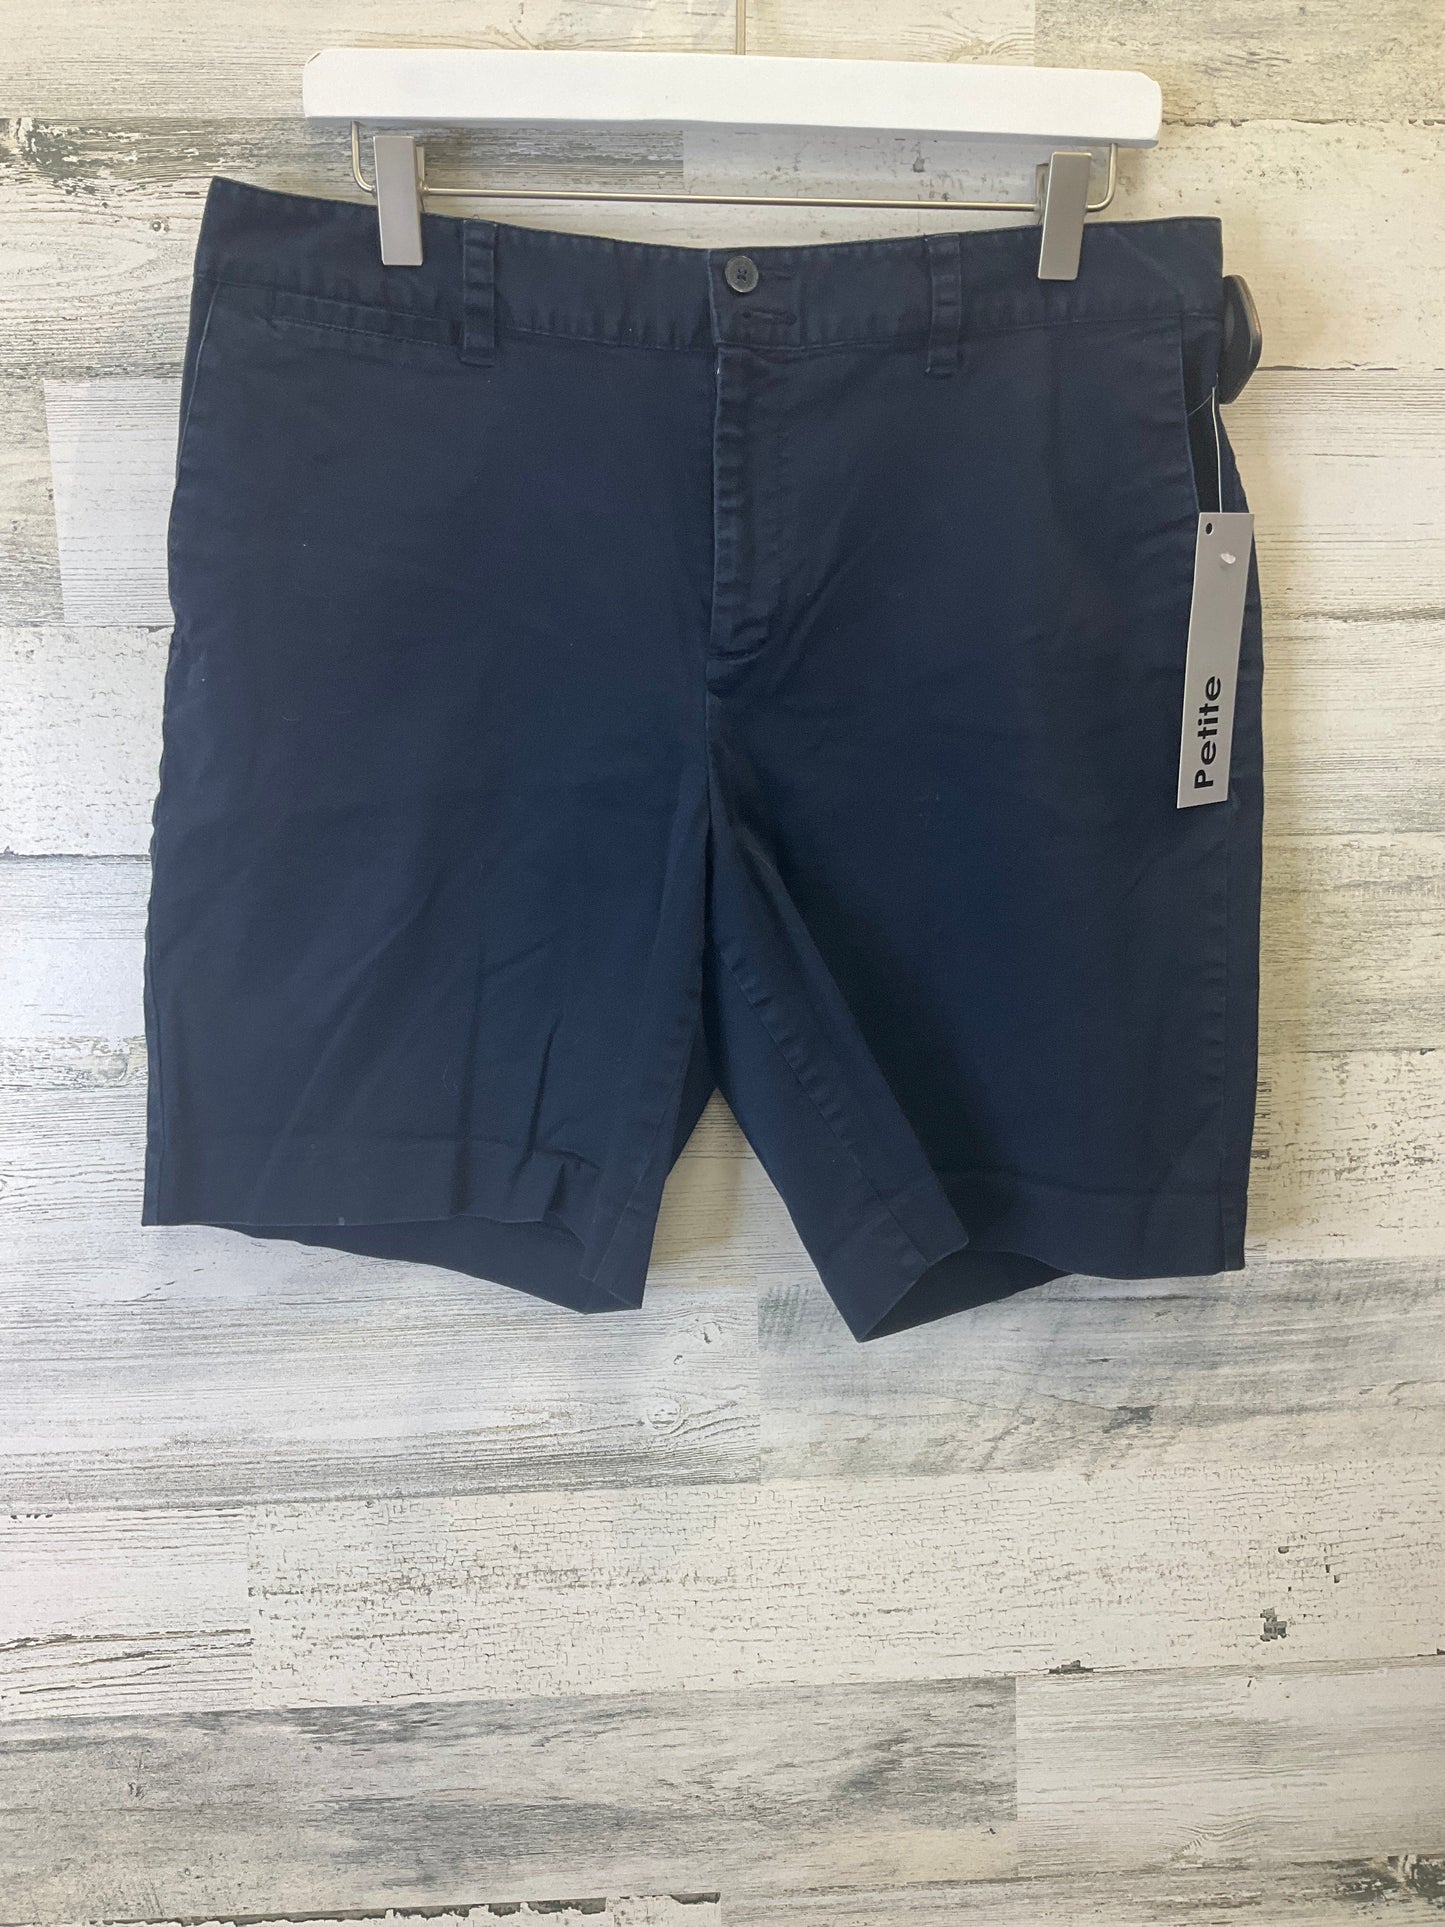 Navy Shorts Chaps, Size 12petite